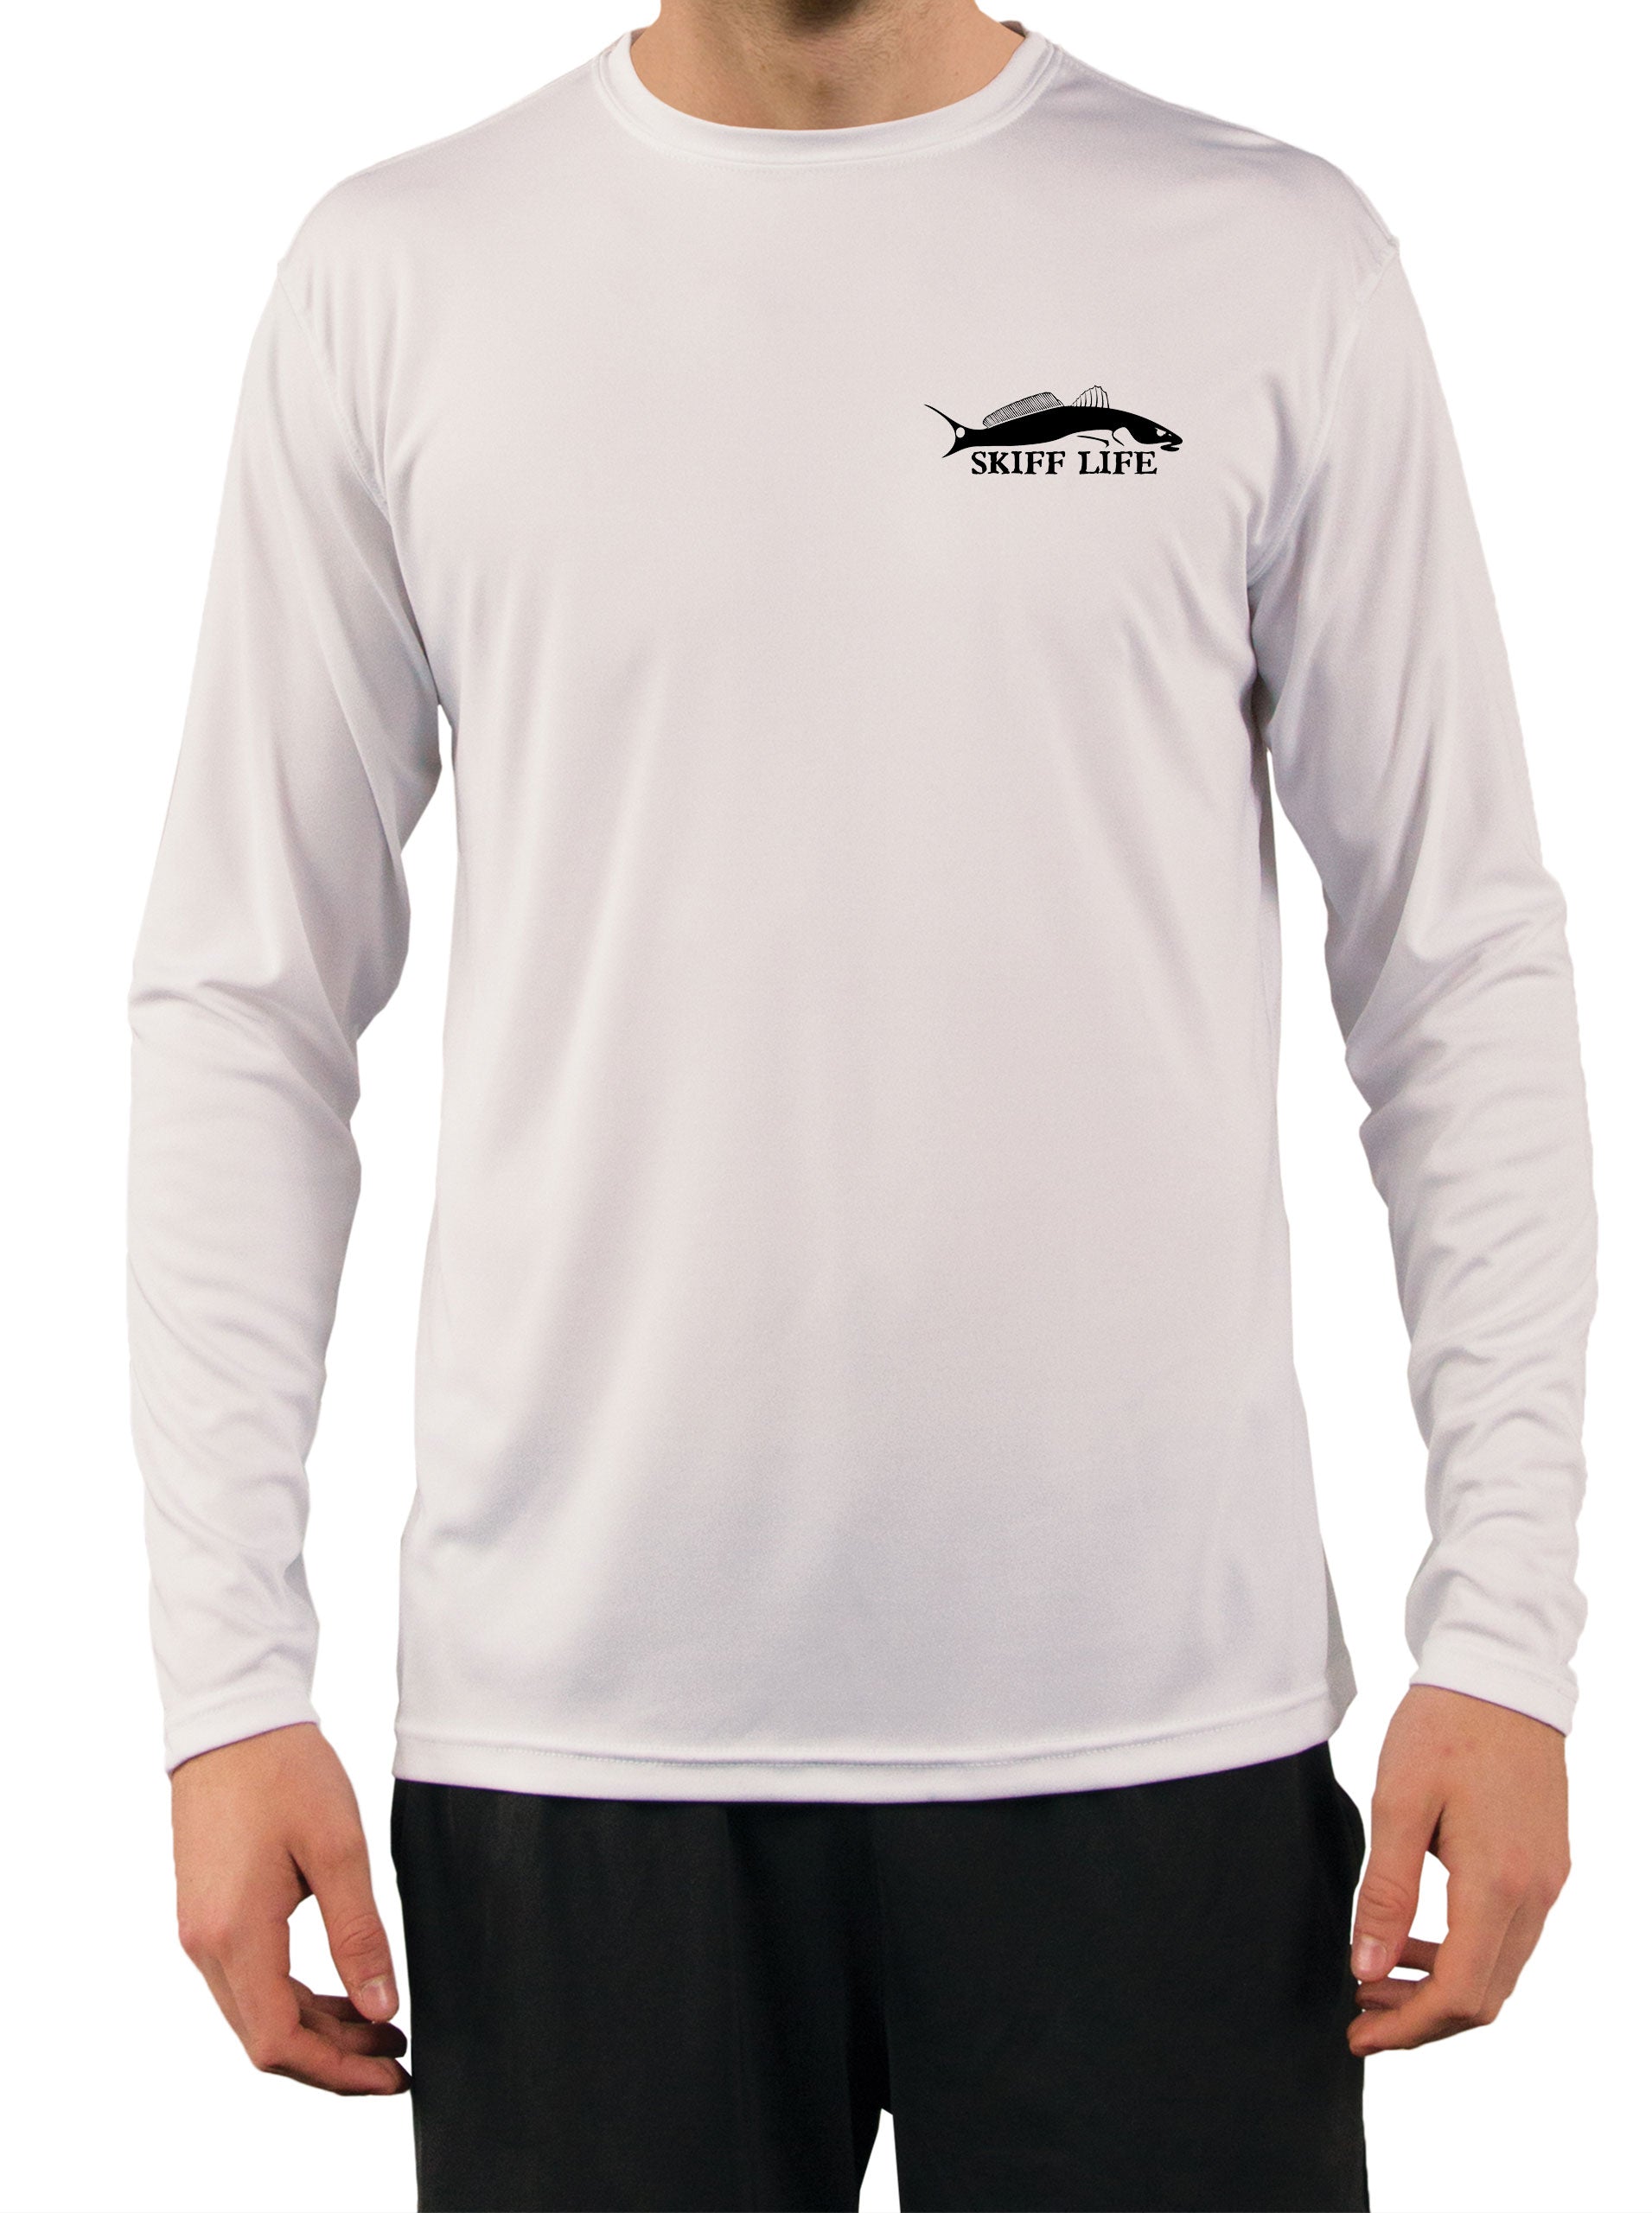 Pat Ford Sailfish Vignette Fishing Shirt – Skiff Life